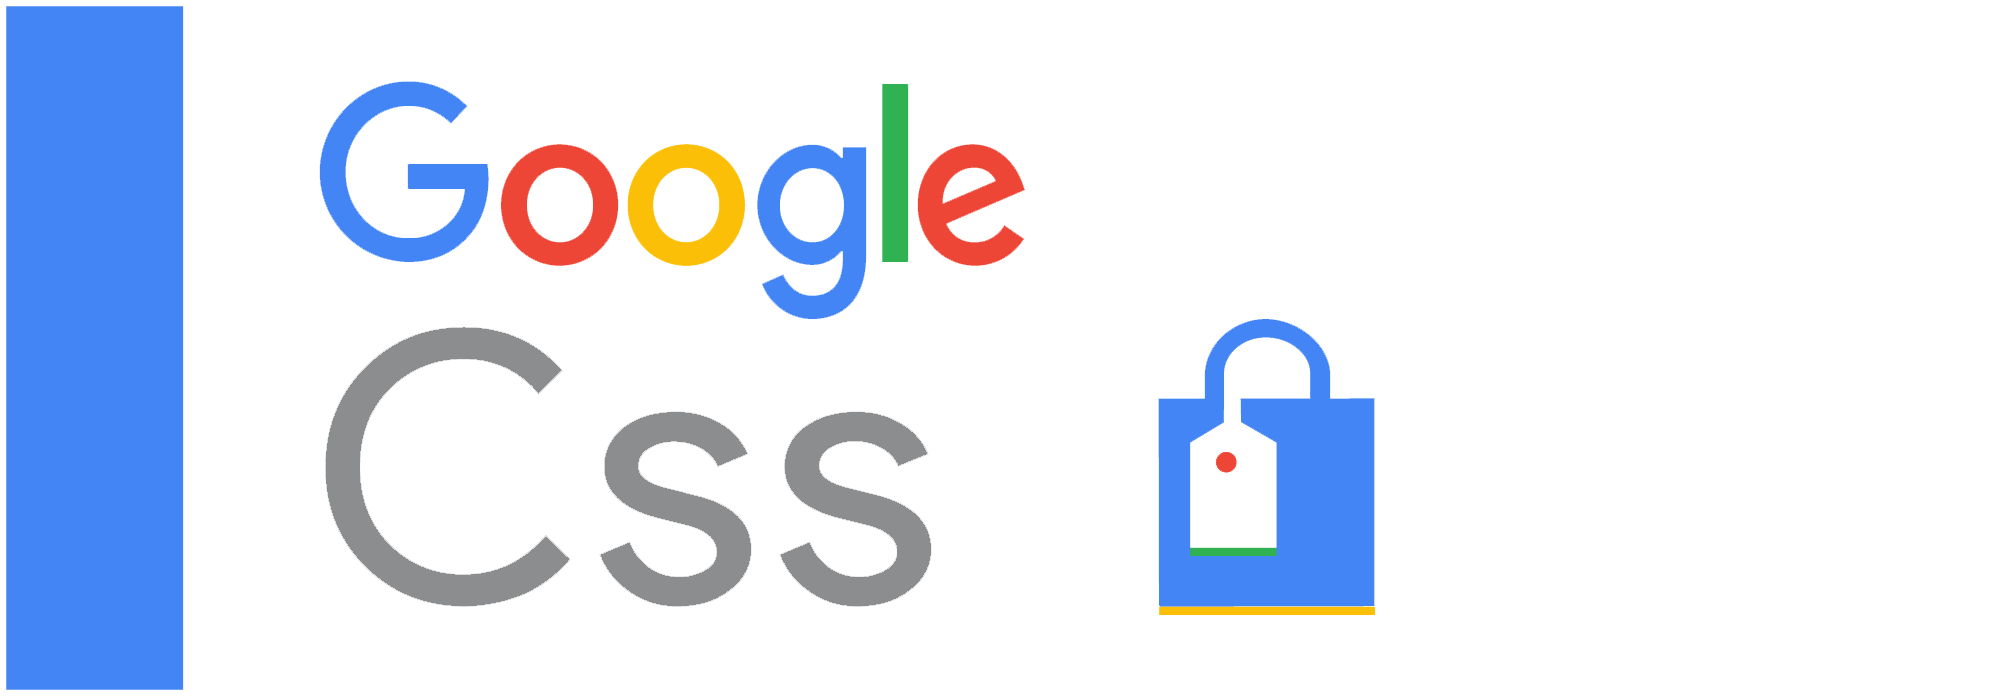 Google-CSS-logo-Arkheus